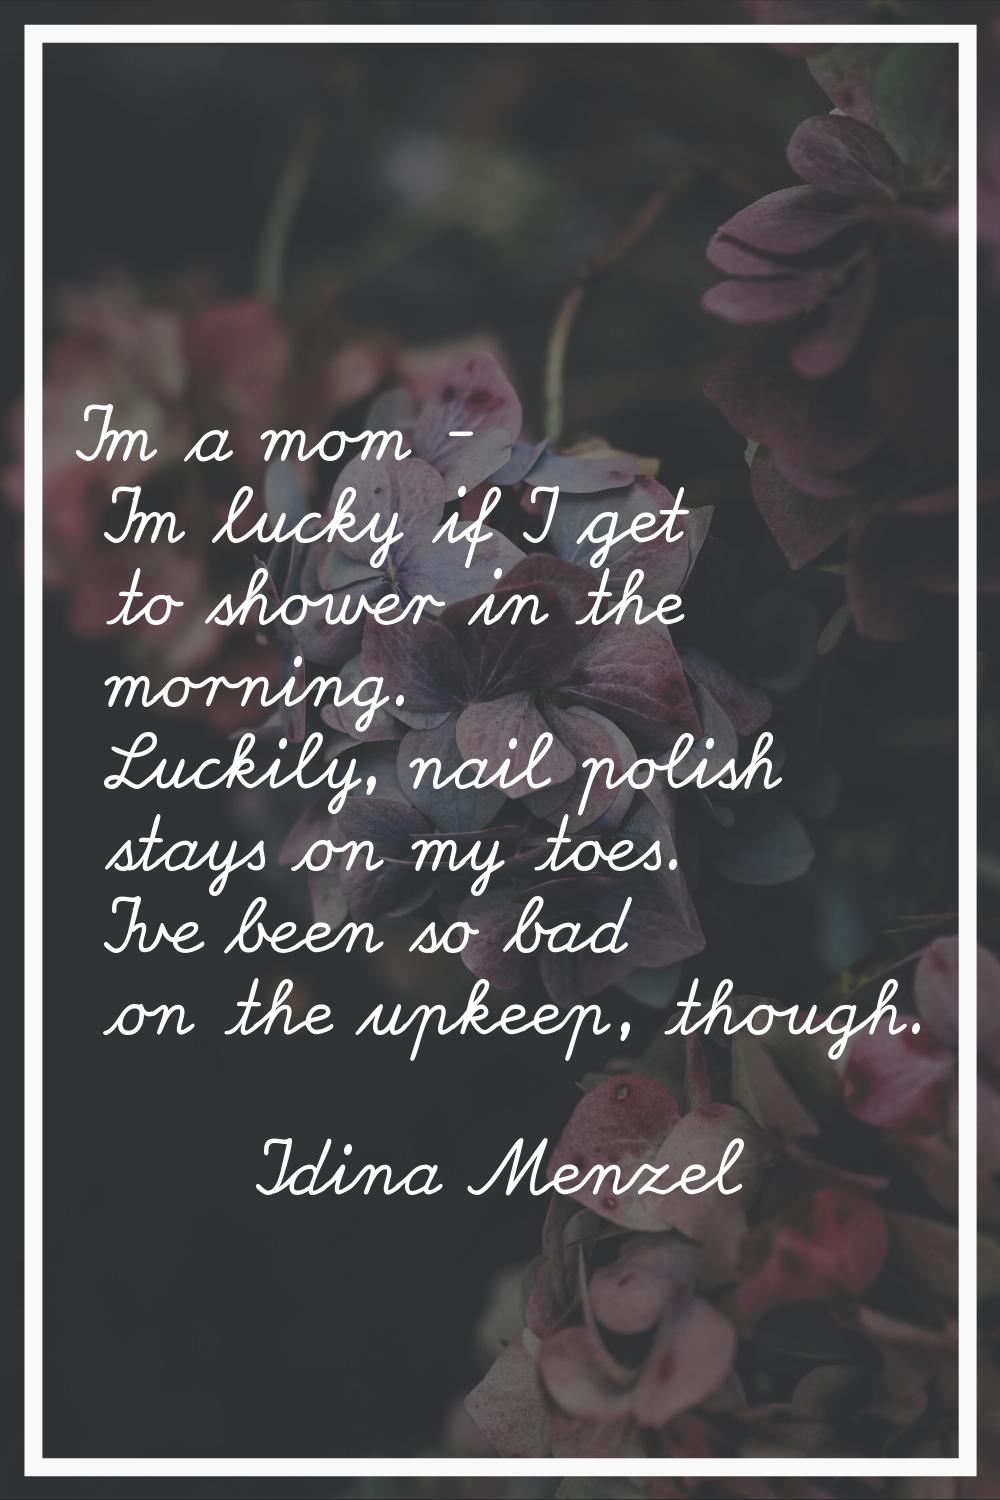 I'm a mom - I'm lucky if I get to shower in the morning. Luckily, nail polish stays on my toes. I'v